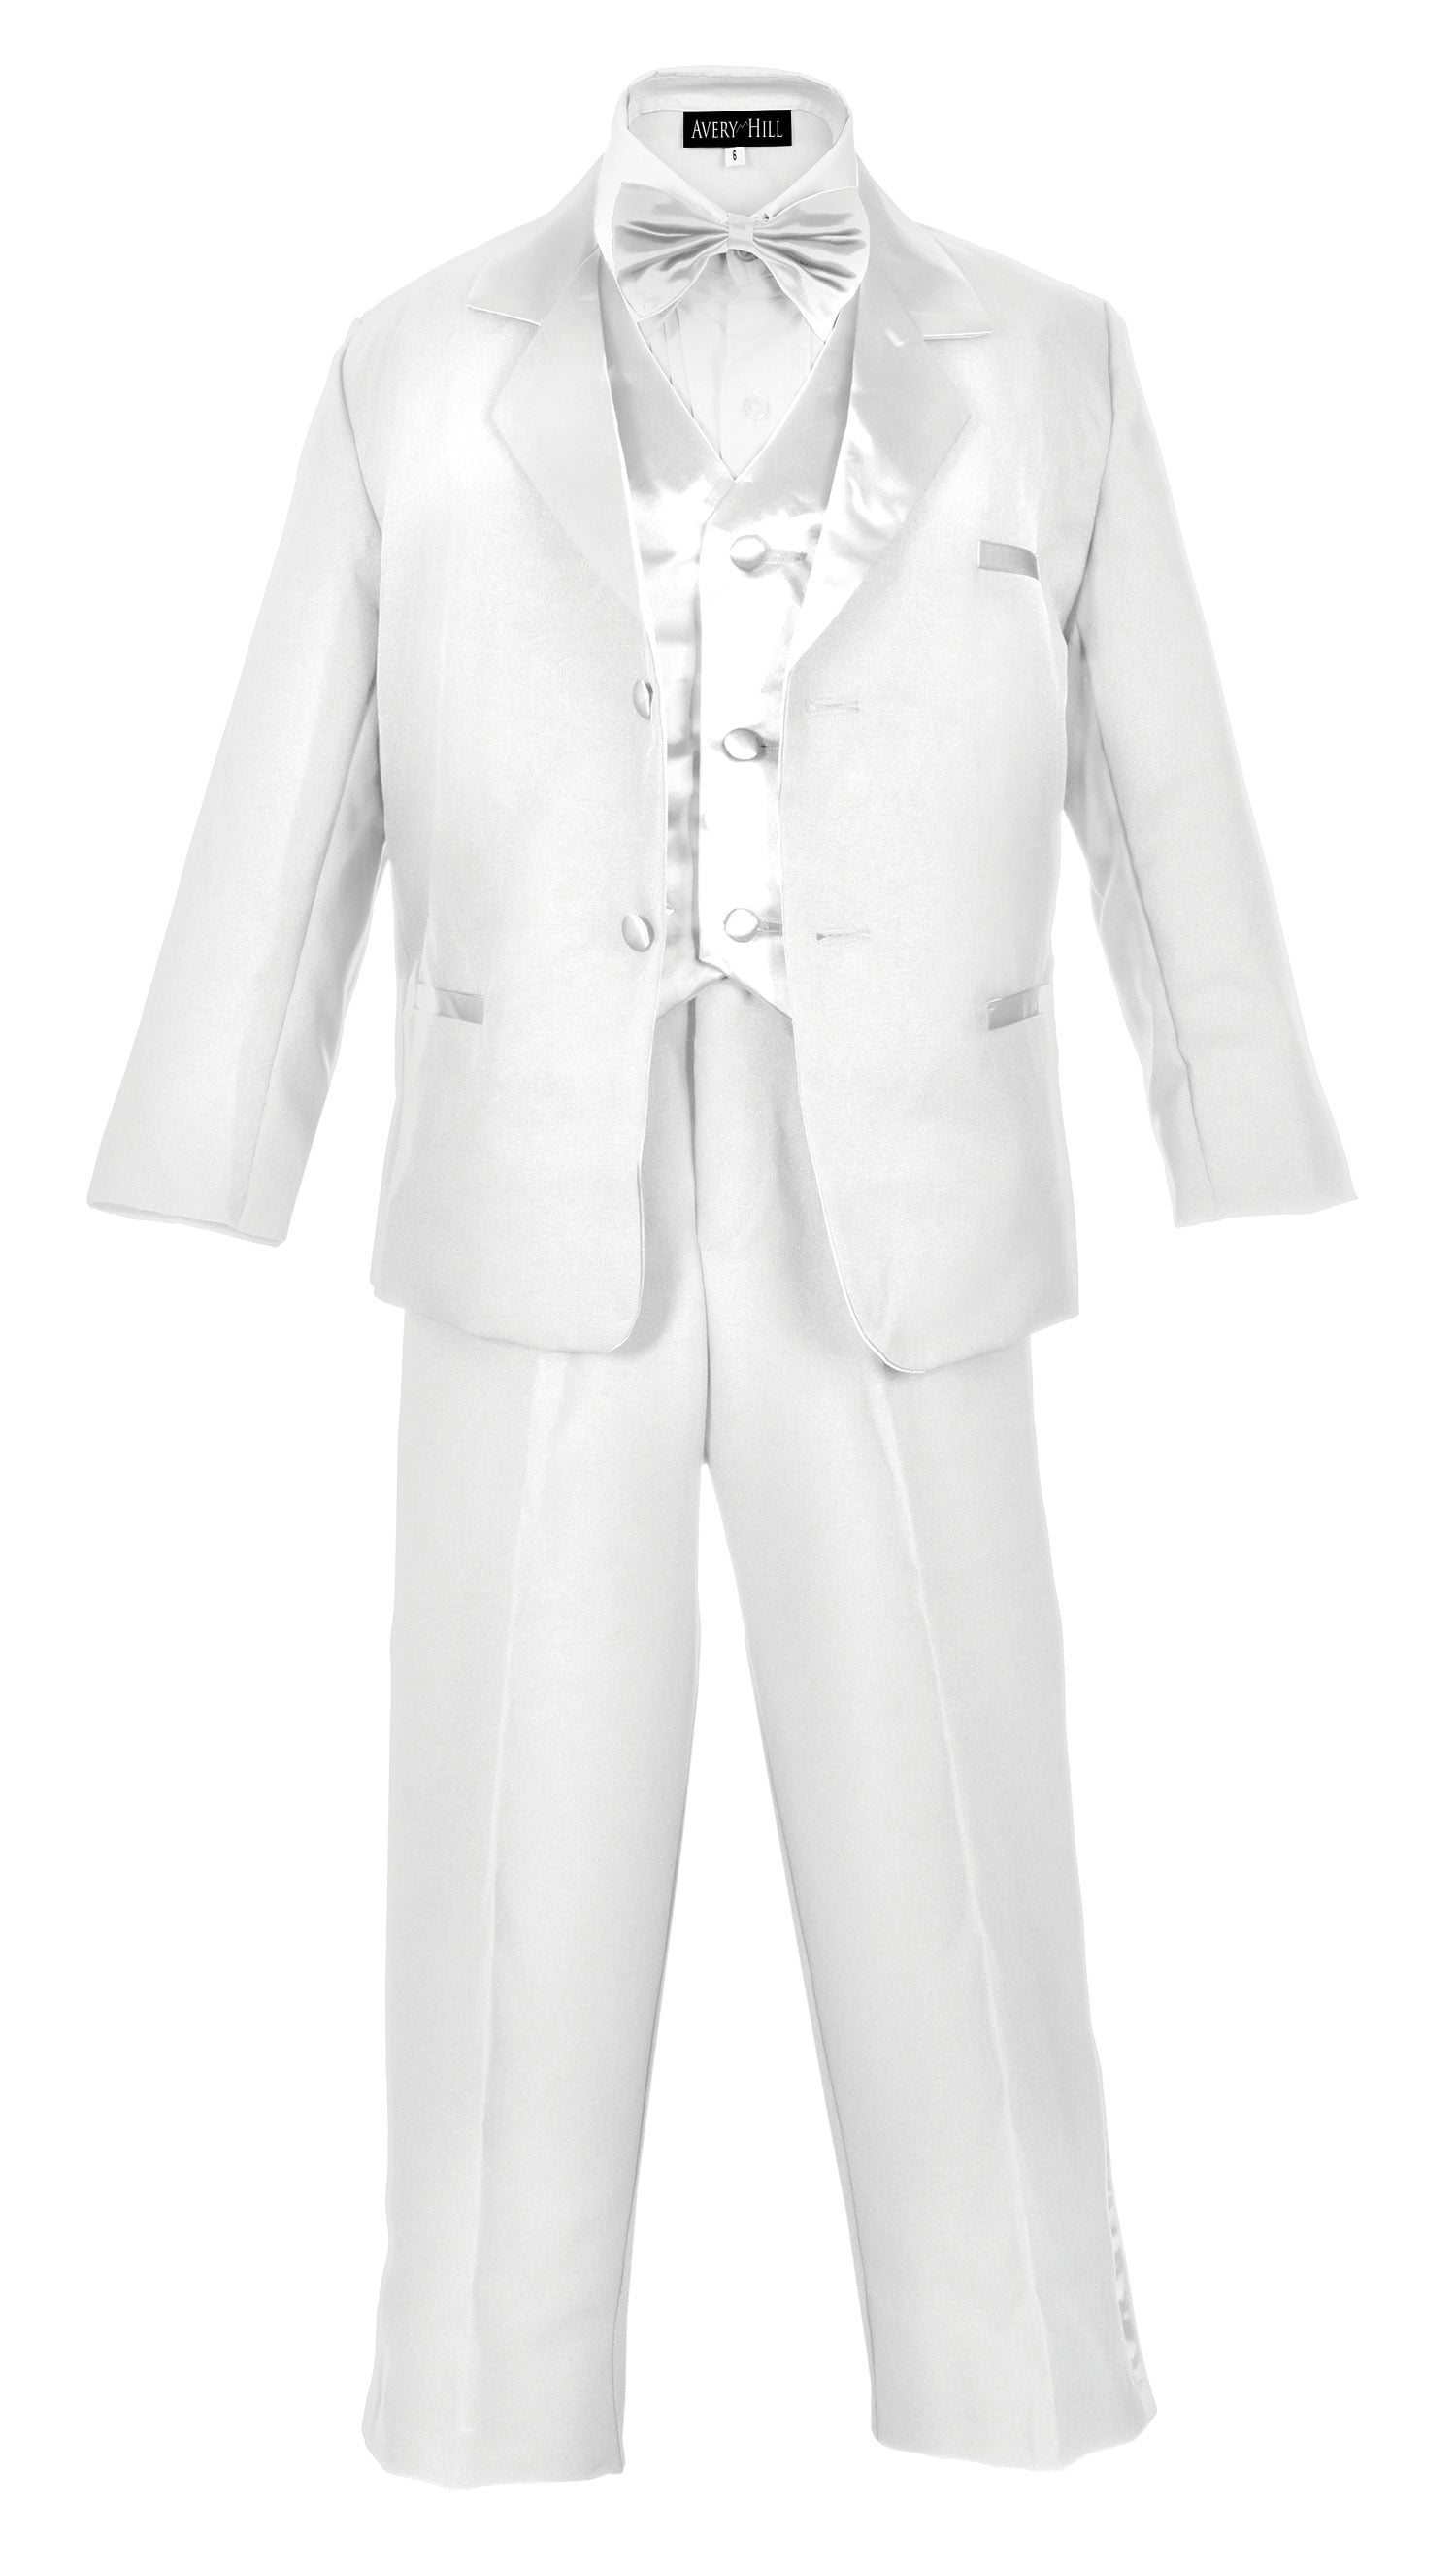 Recital Tuxedo  White Suit Set Ring Bearer Size Small  to 14 Boys Baptism 